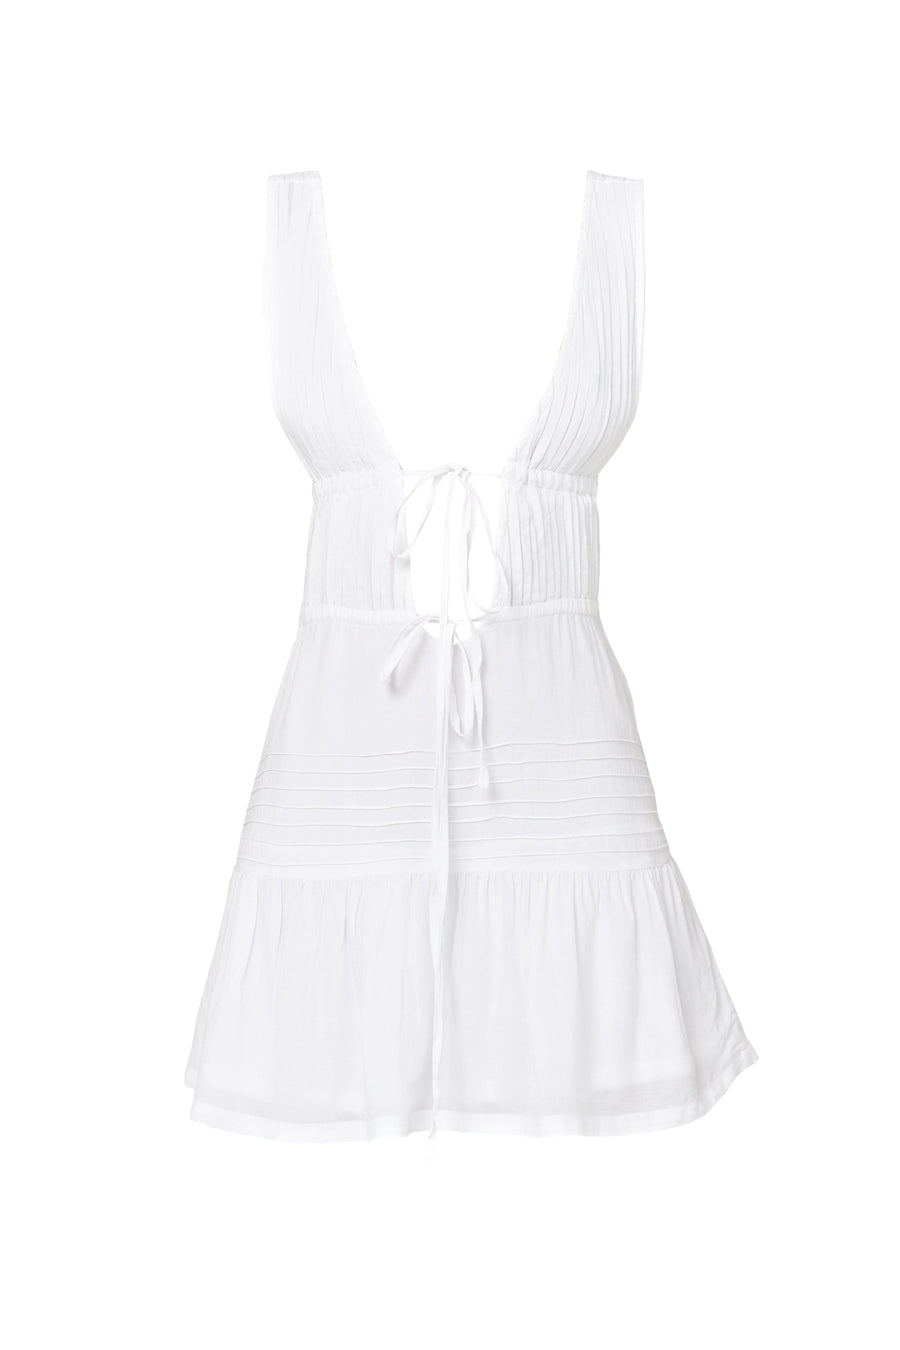 CAPRI dress- white  -  CLOTHING  -  B Ā M B A S W I M